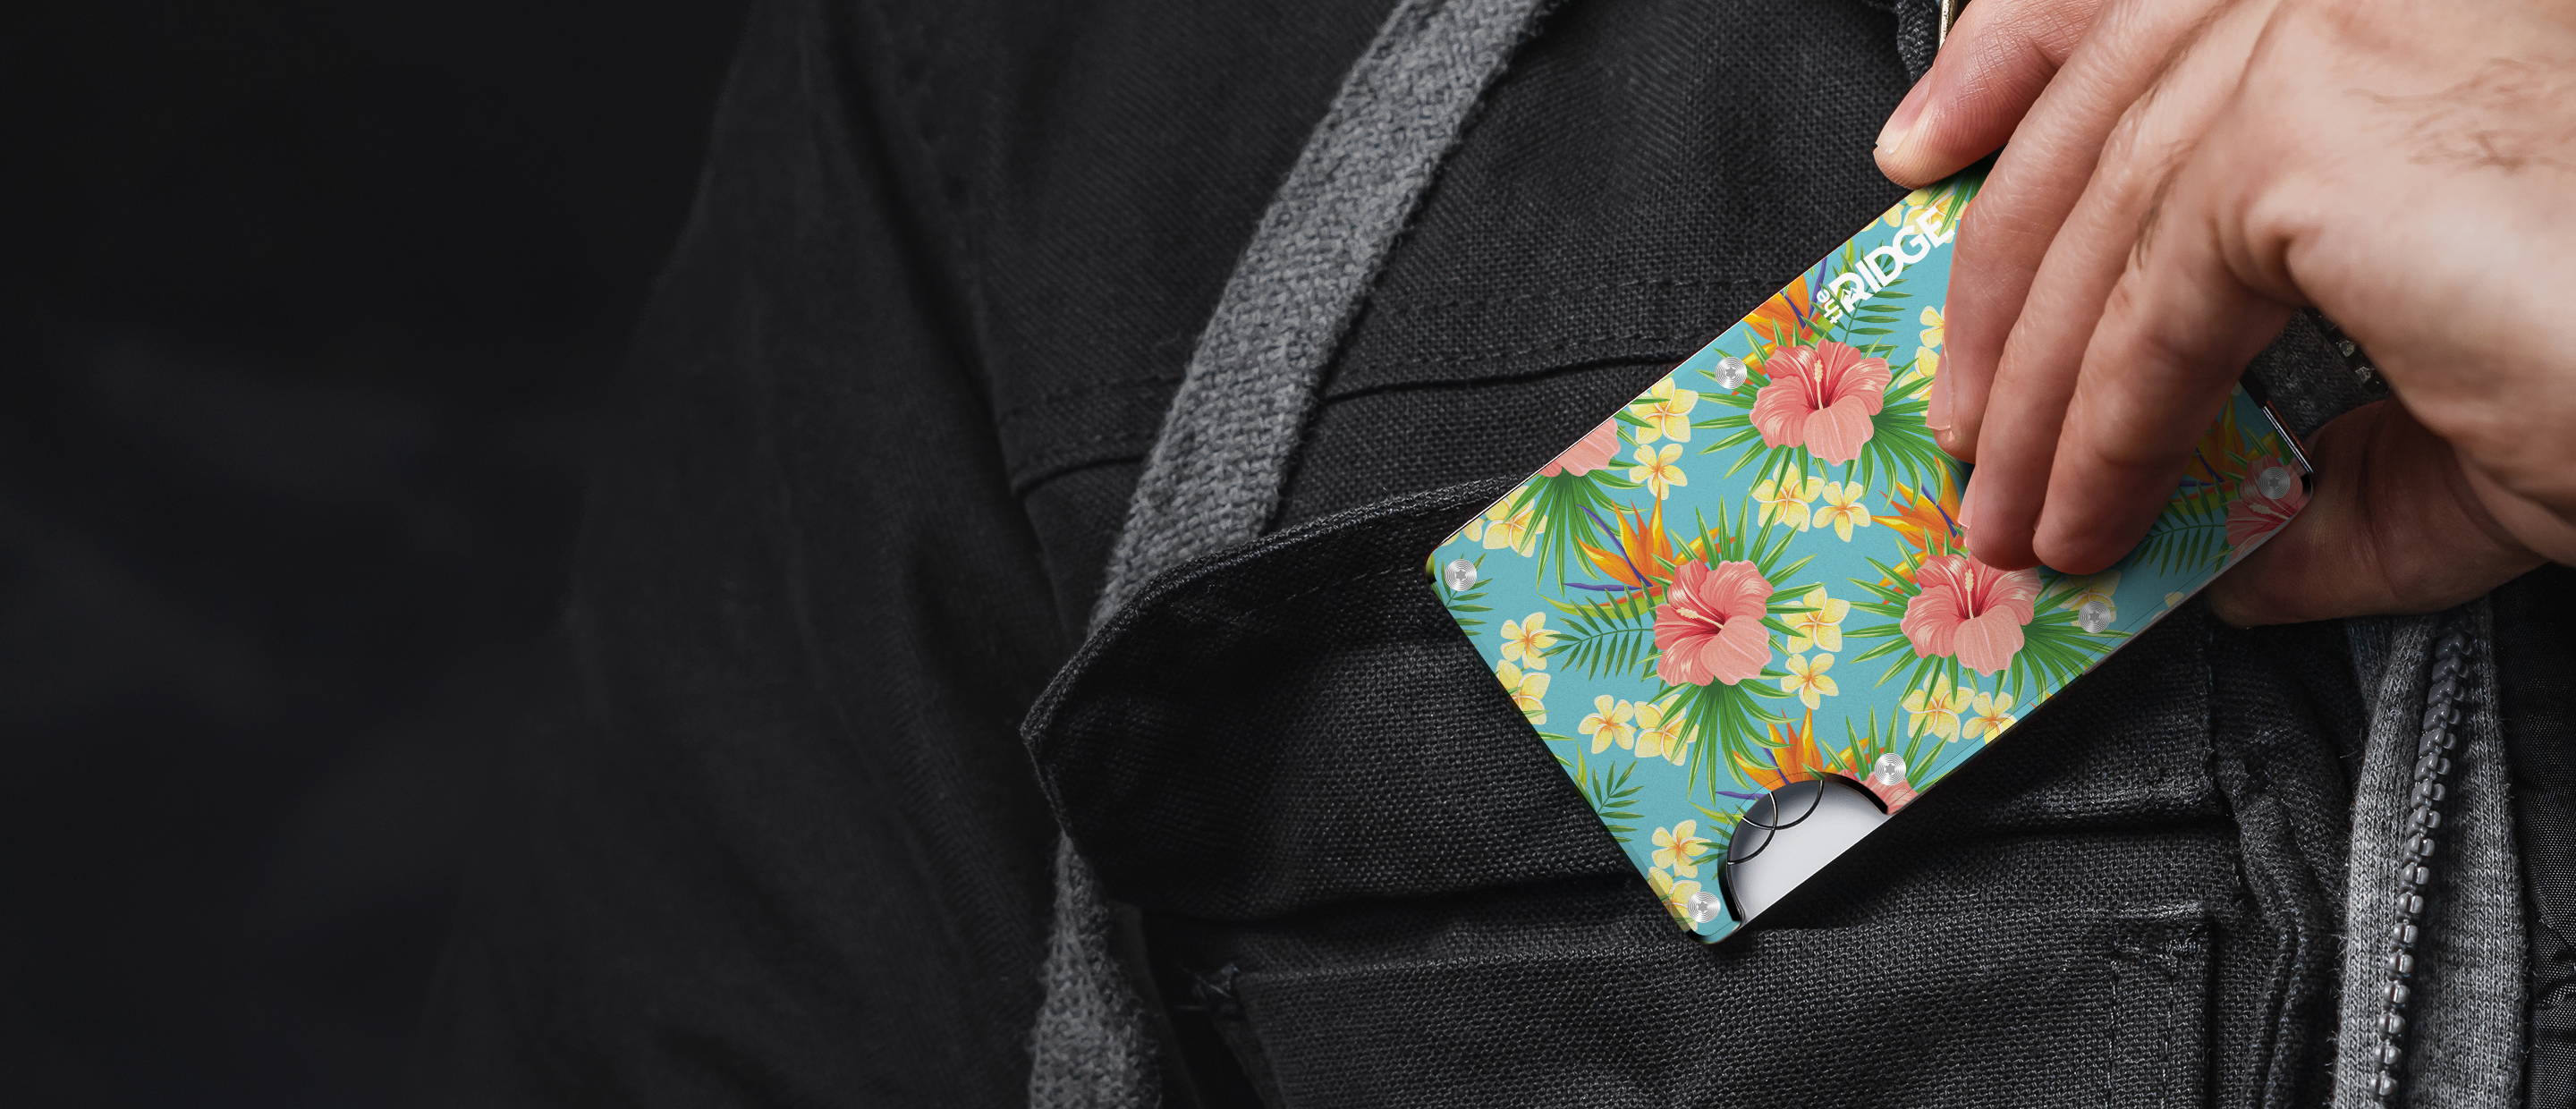 Tropical Ridge wallet on a man's chest pocket